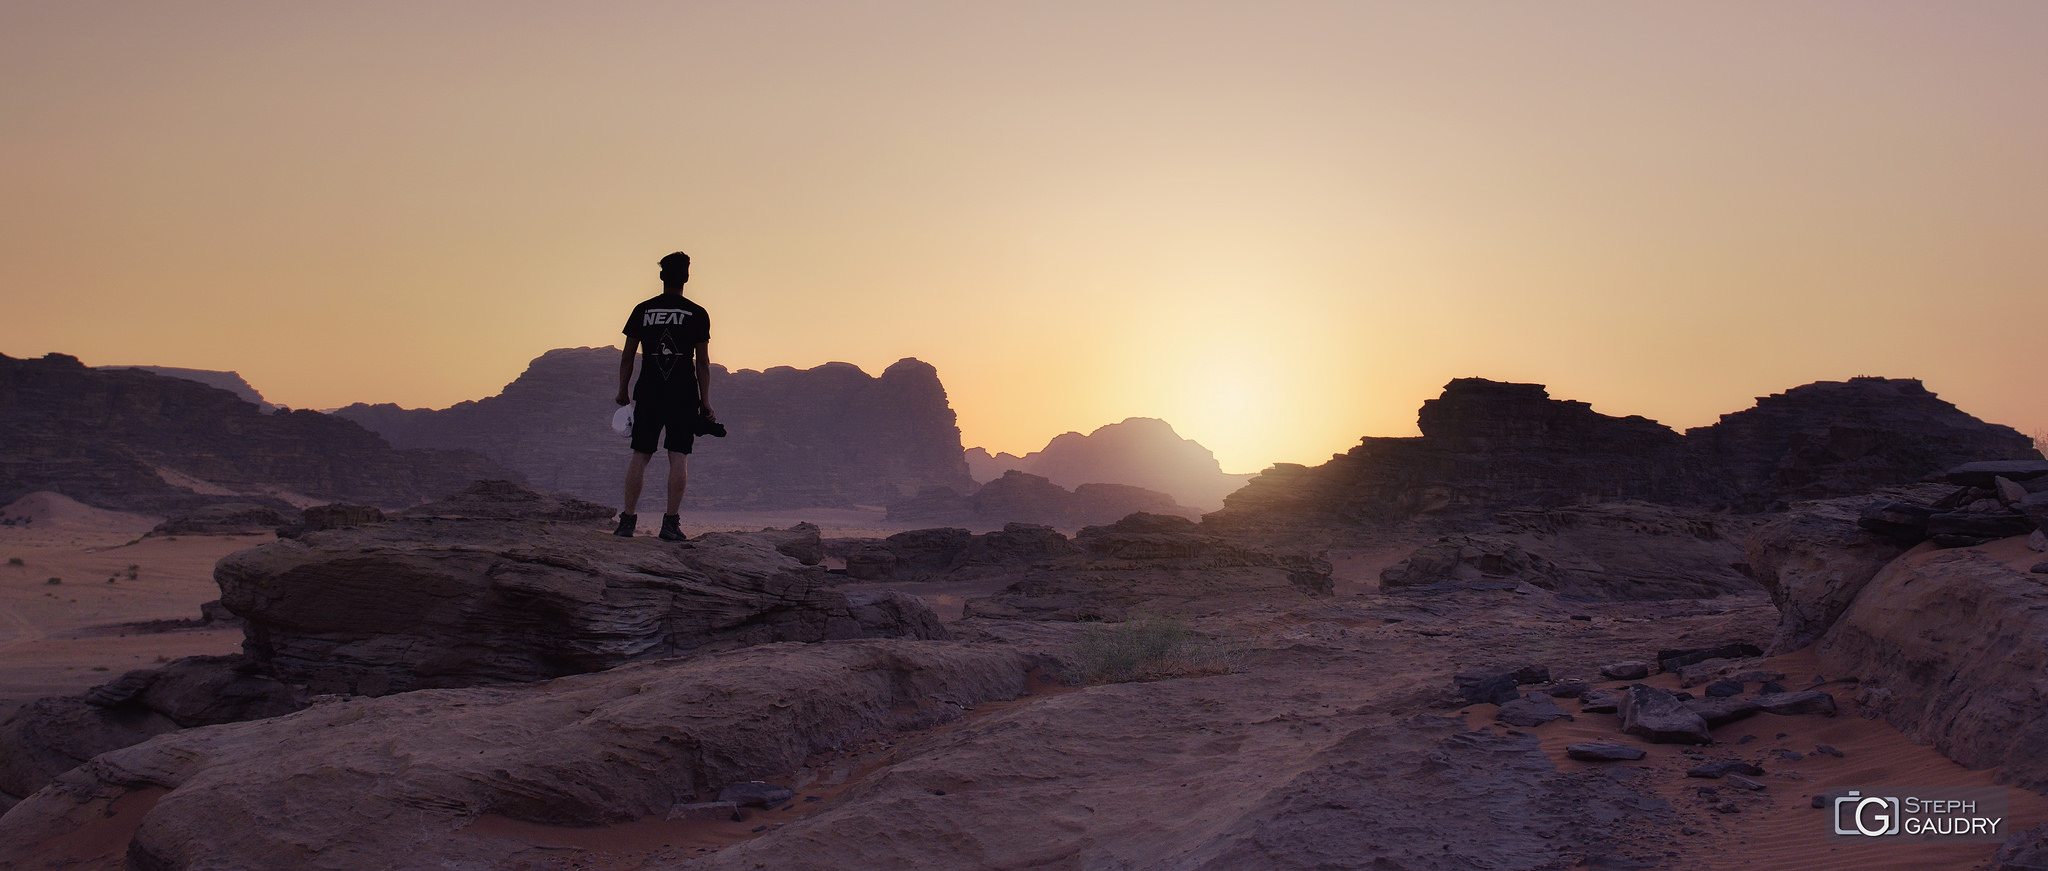 Wadi-Rum, sunset in the desert - my son Tom [Cliquez pour lancer le diaporama]